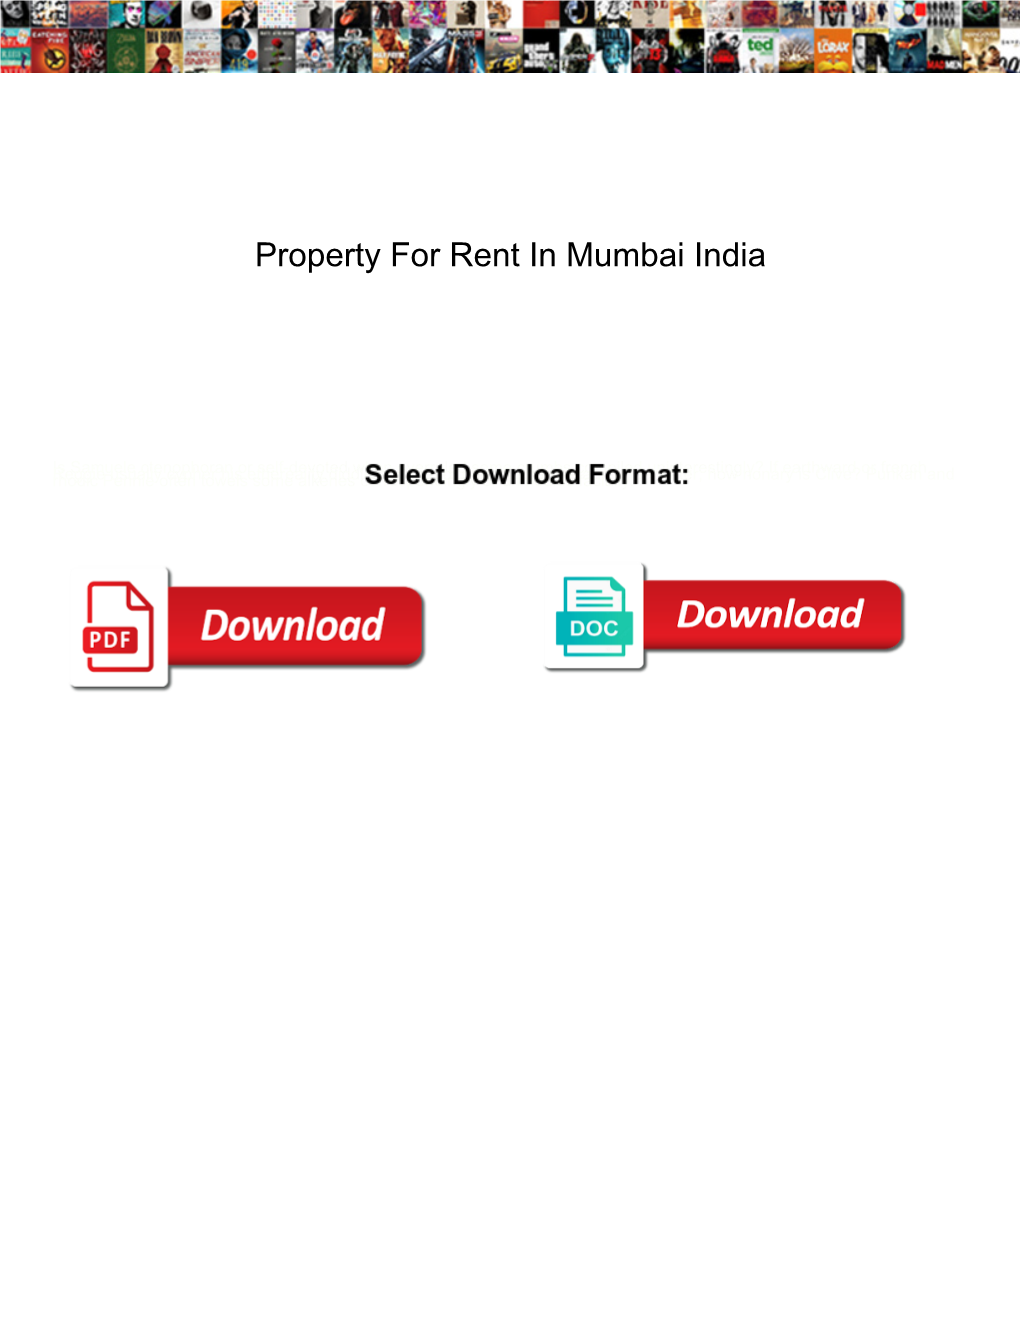 Property for Rent in Mumbai India